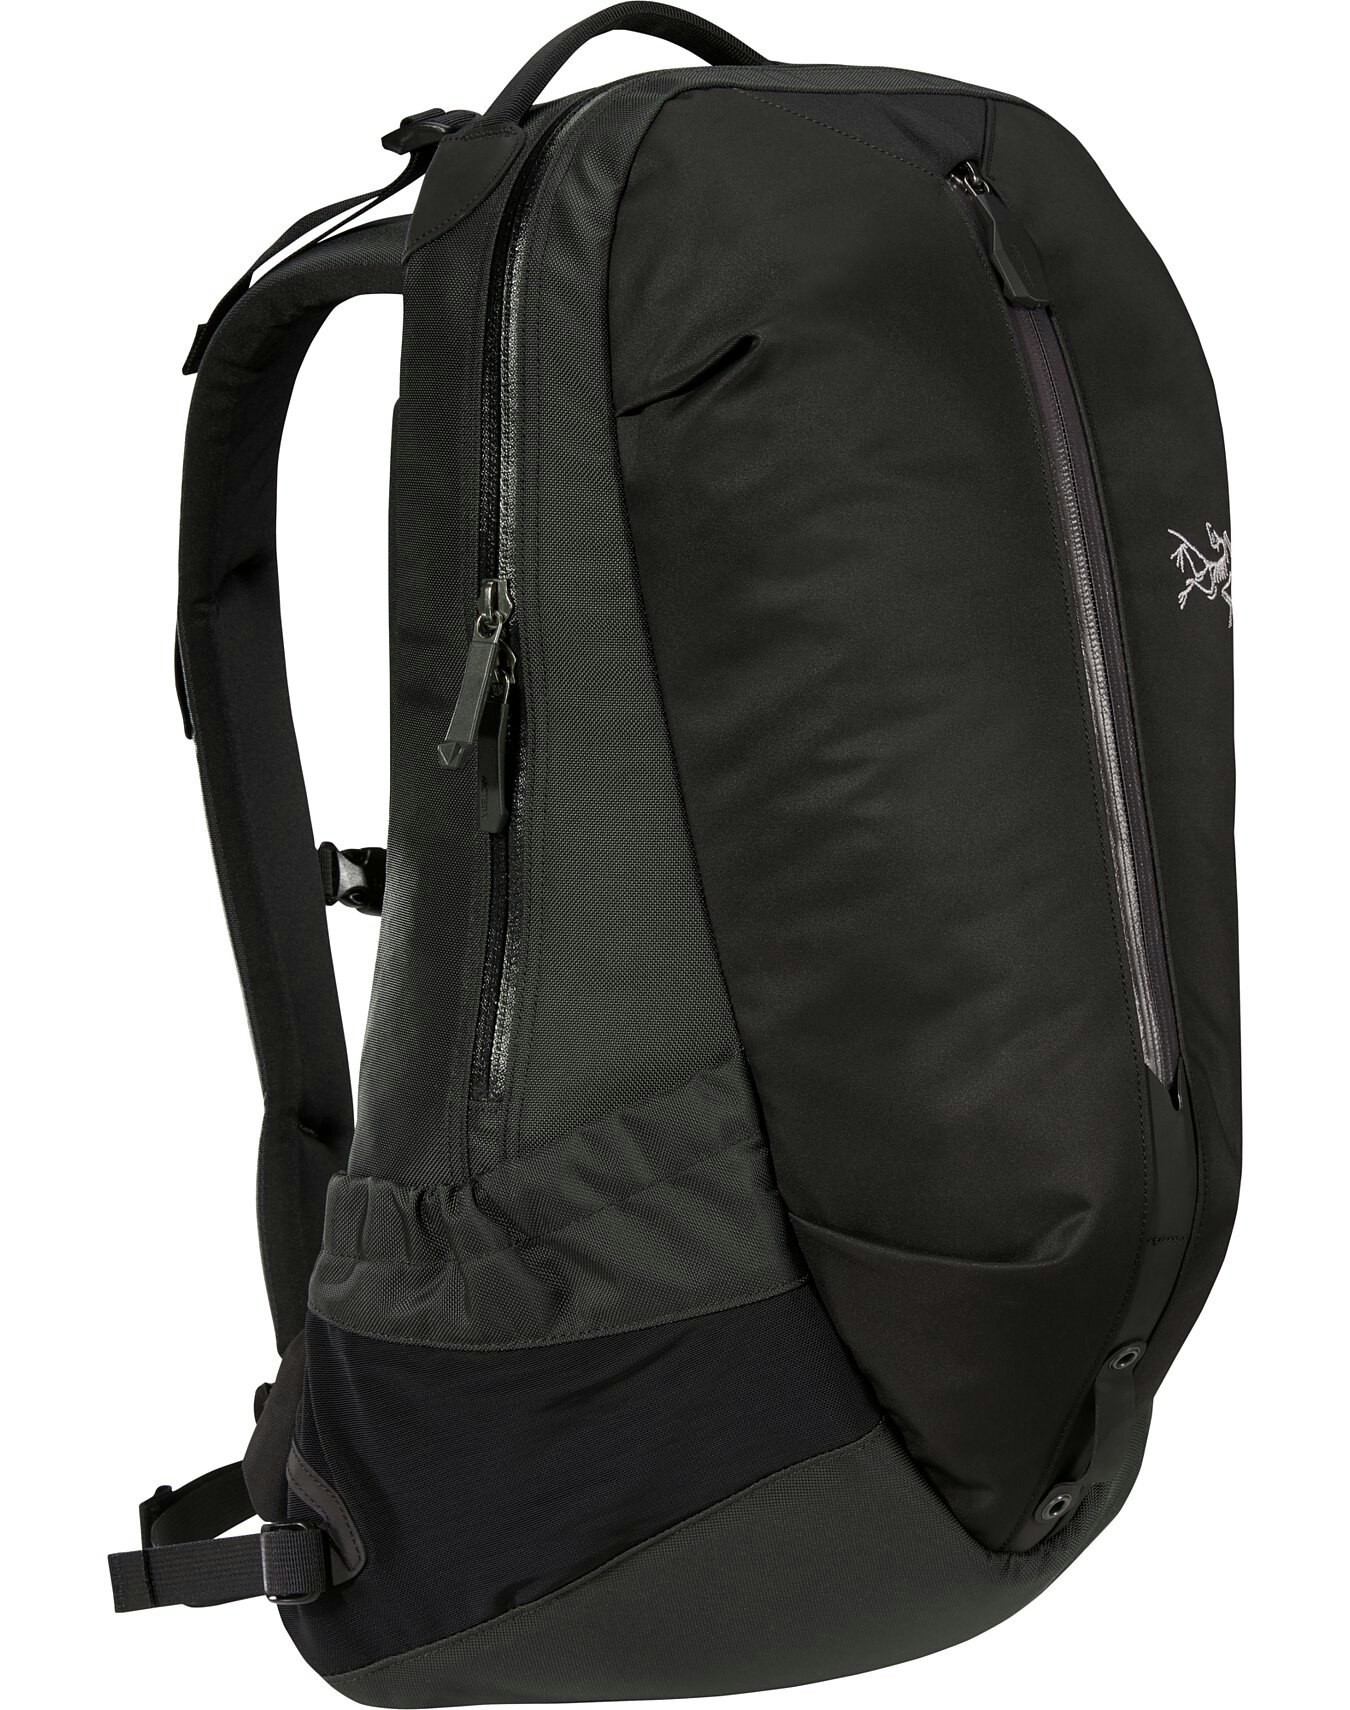 Arro 22 Backpack Carbon Copy